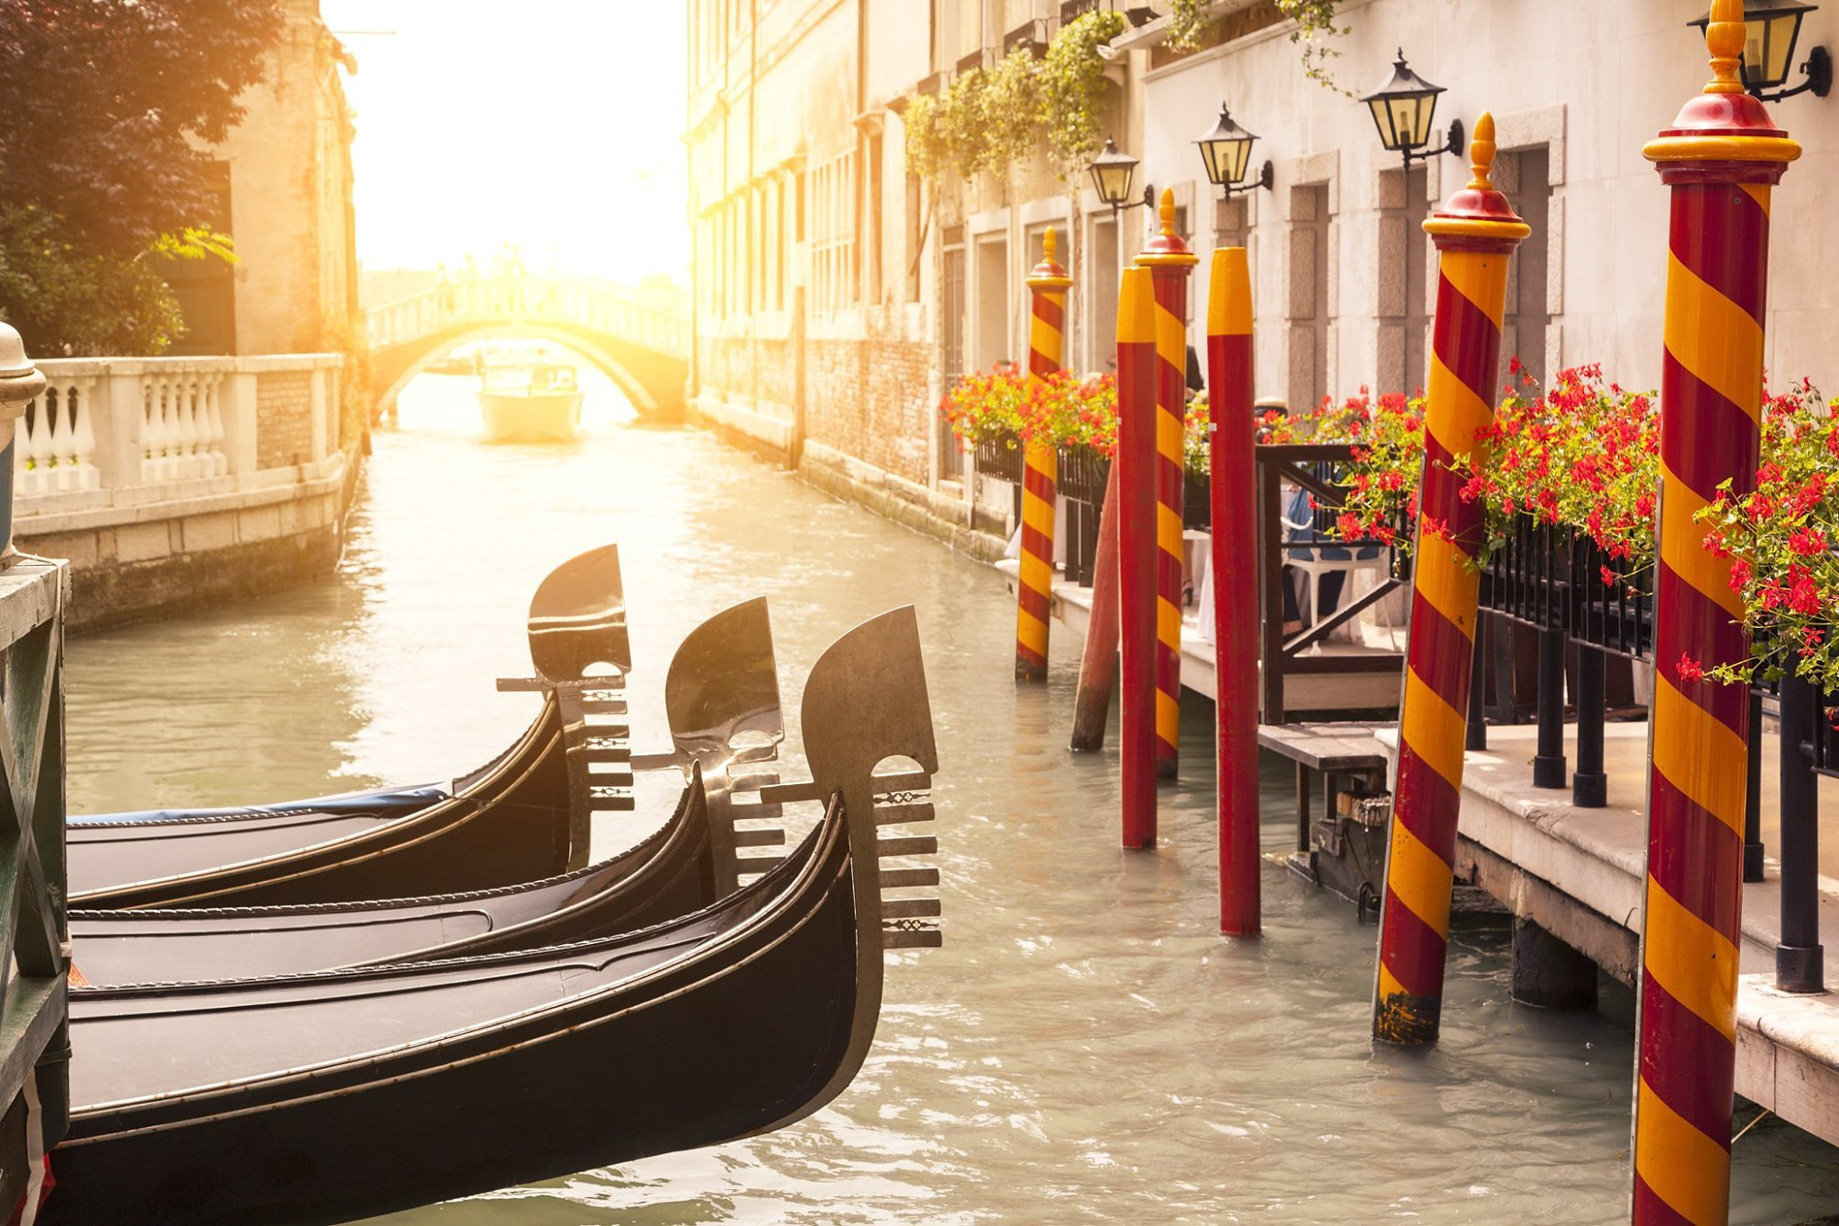 Baglioni Hotel Luna, Venezia – Venice, Italy – Canal